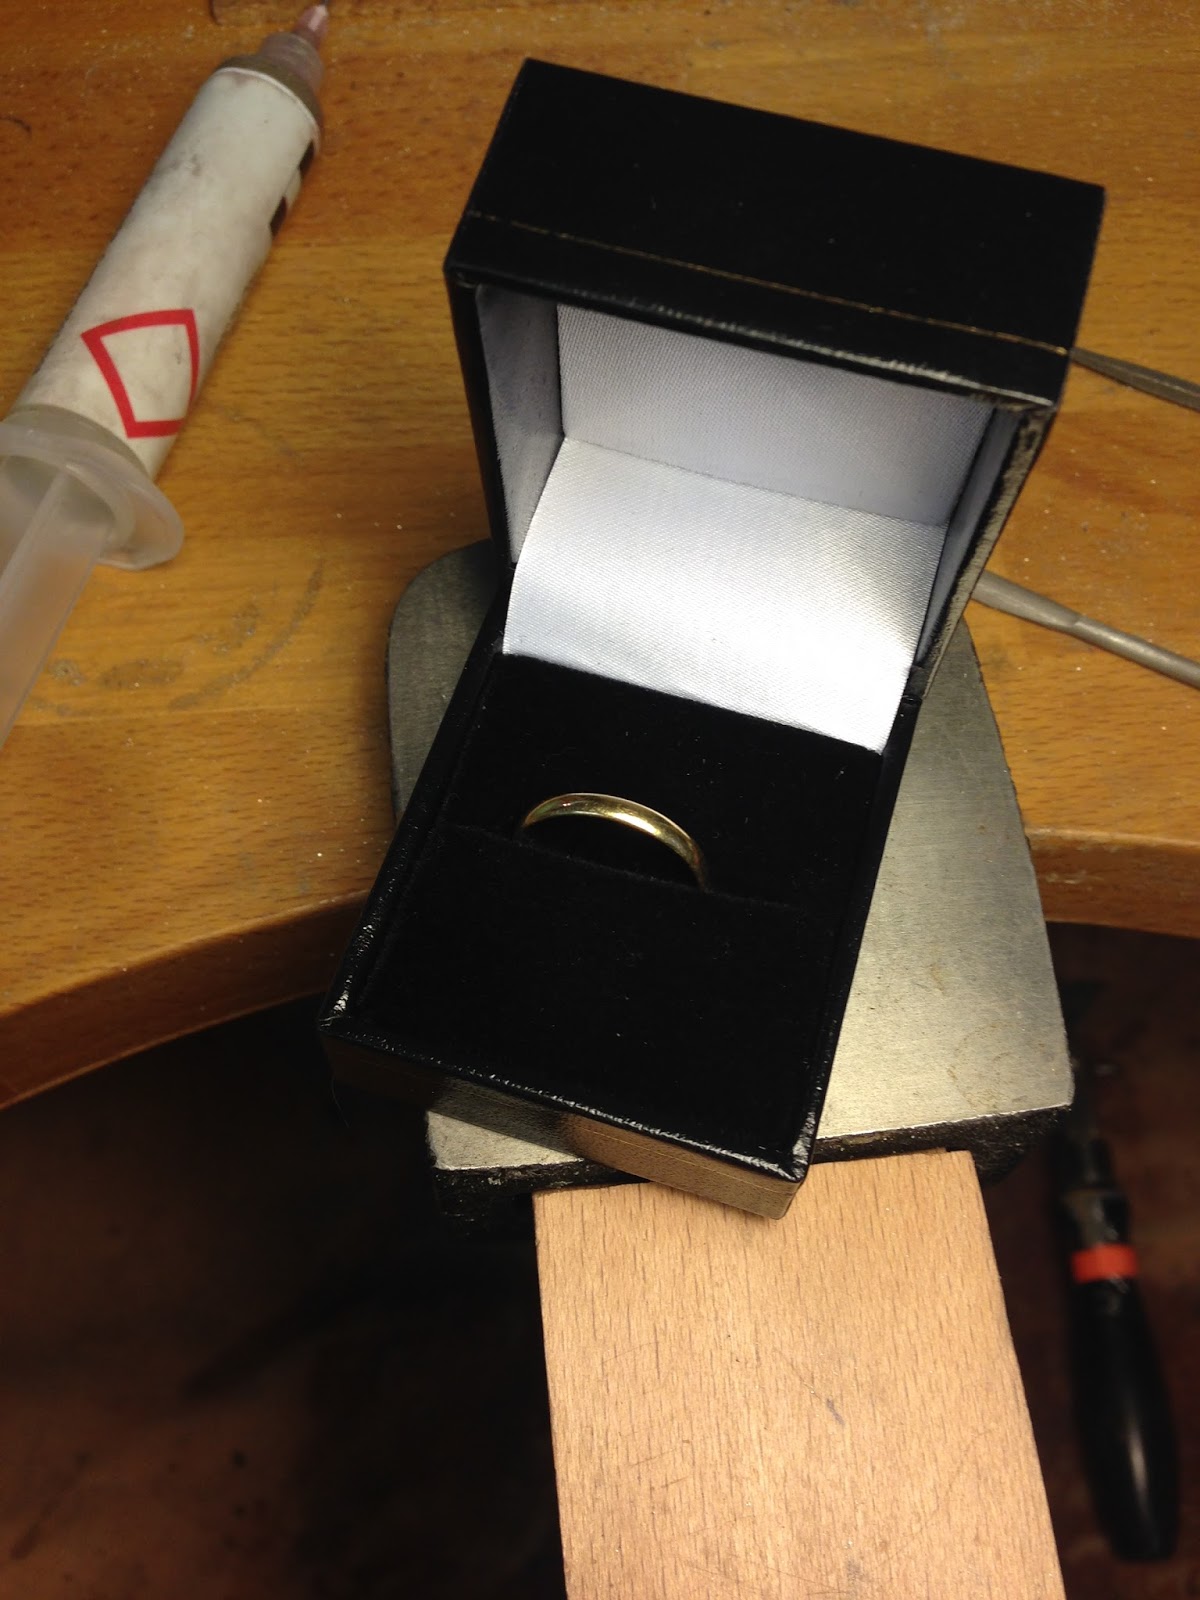 Can you make wedding ring bigger